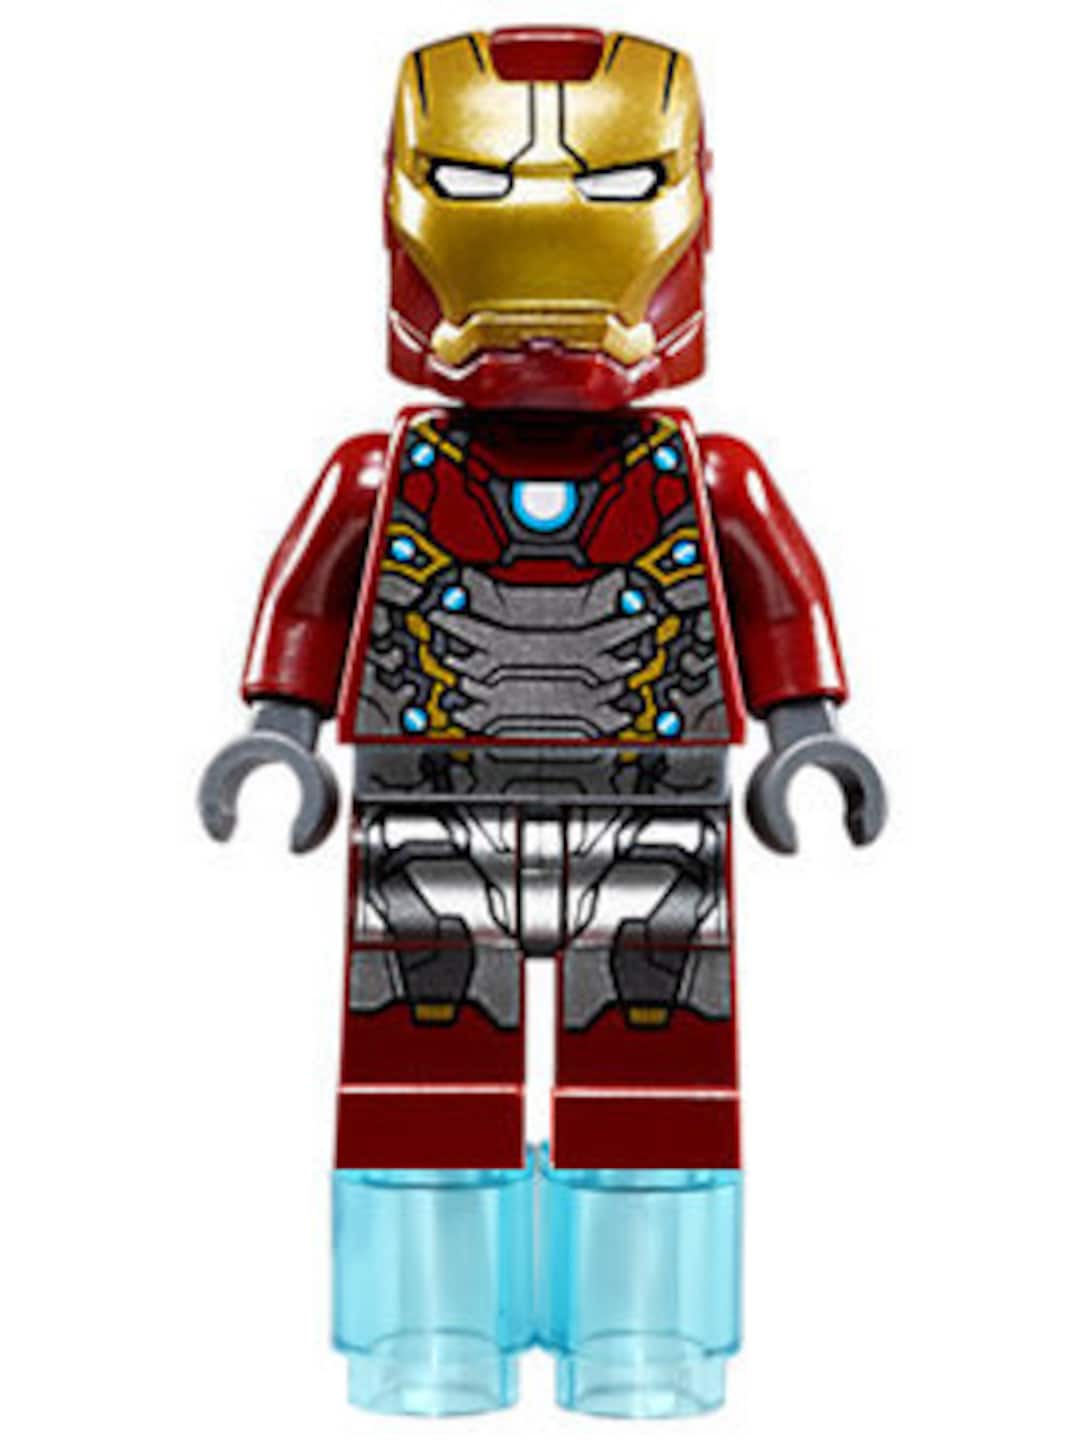 Lego MINIFIGURE Iron Man Mark 47 Armor 